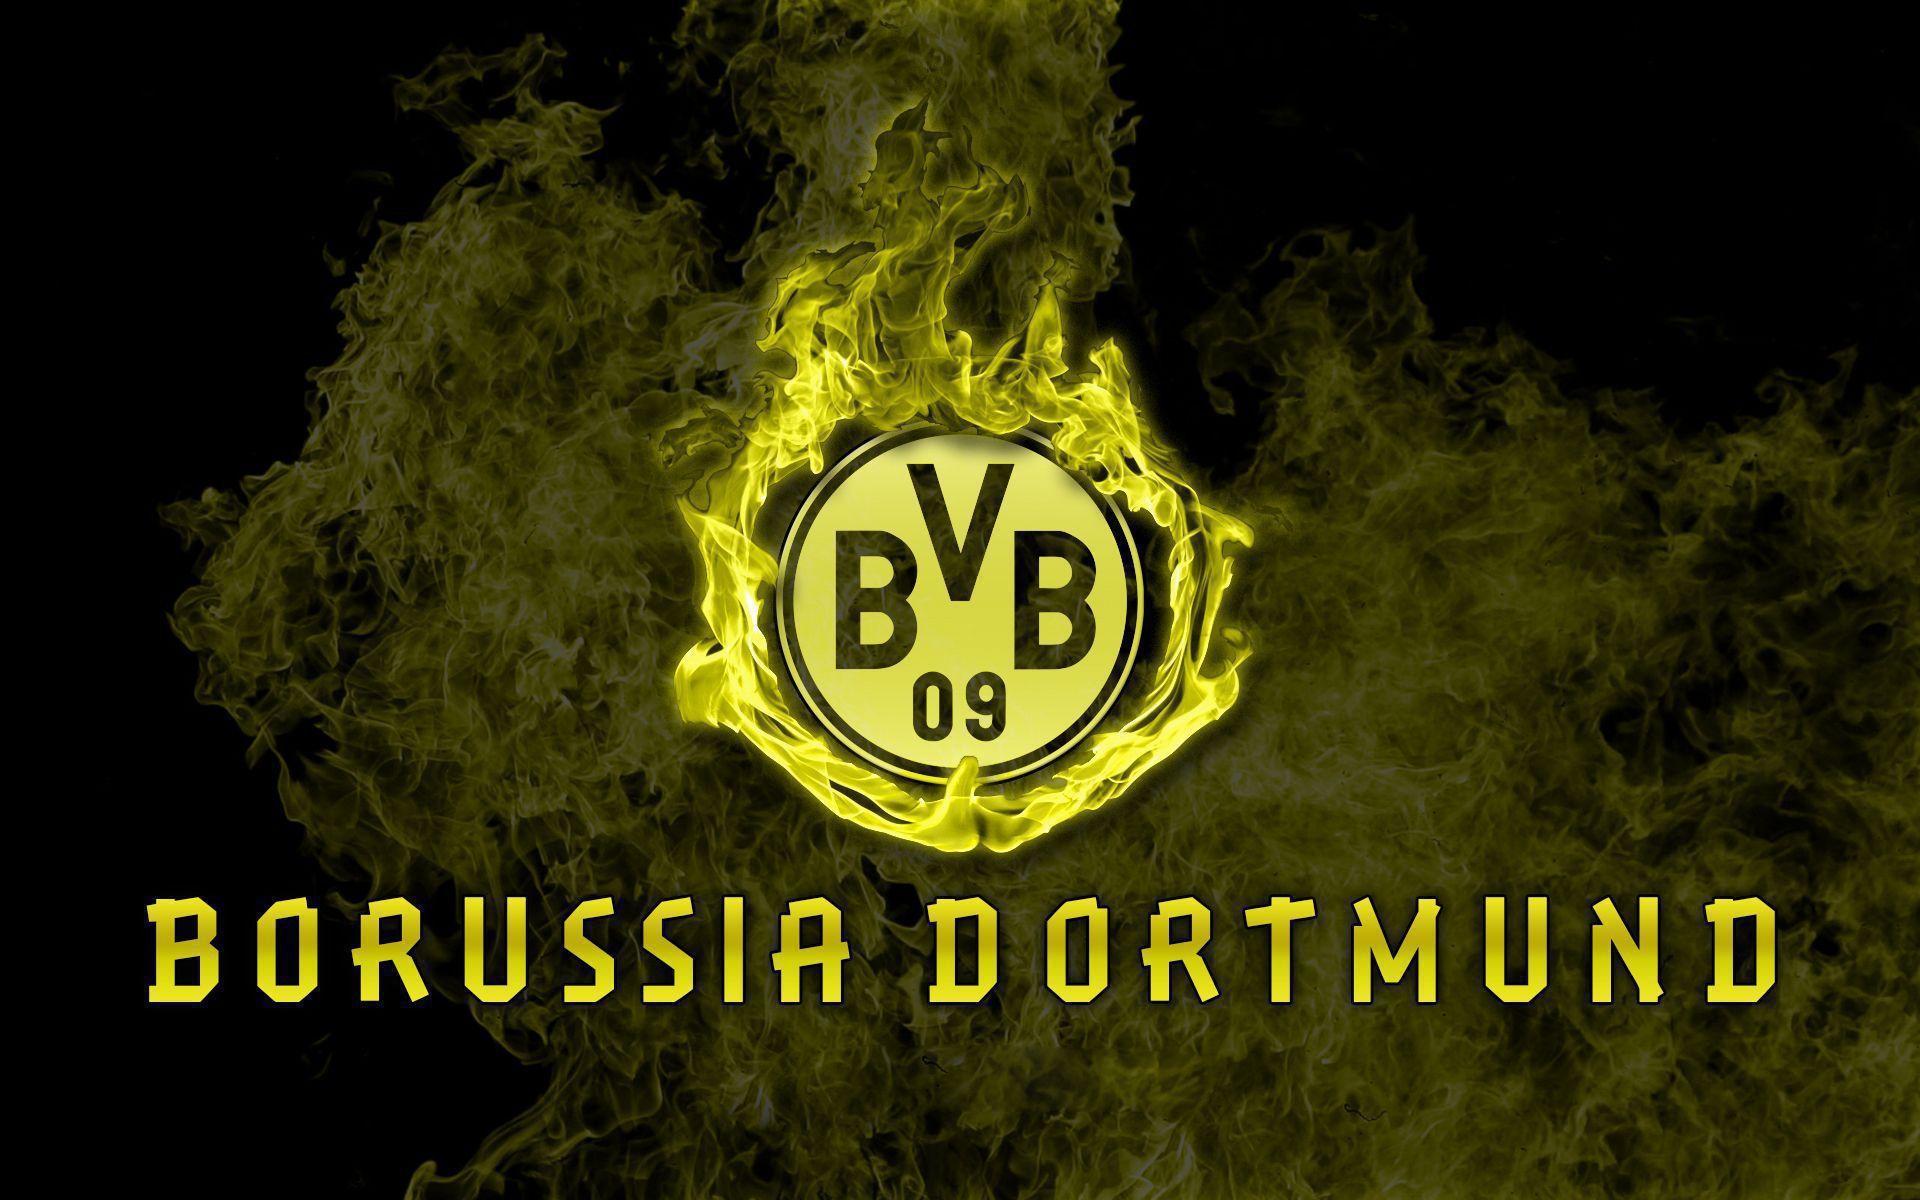 Borussia Dortmund Free HD Wallpaper Image Background